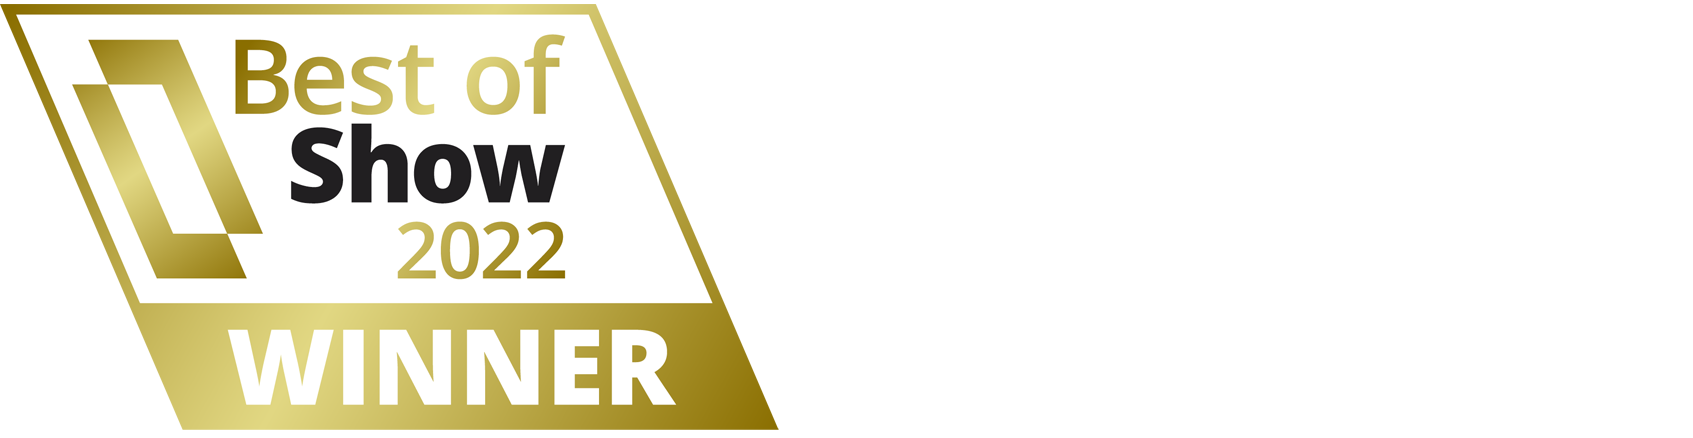 Best of Show 2022 Winner RadioWorld